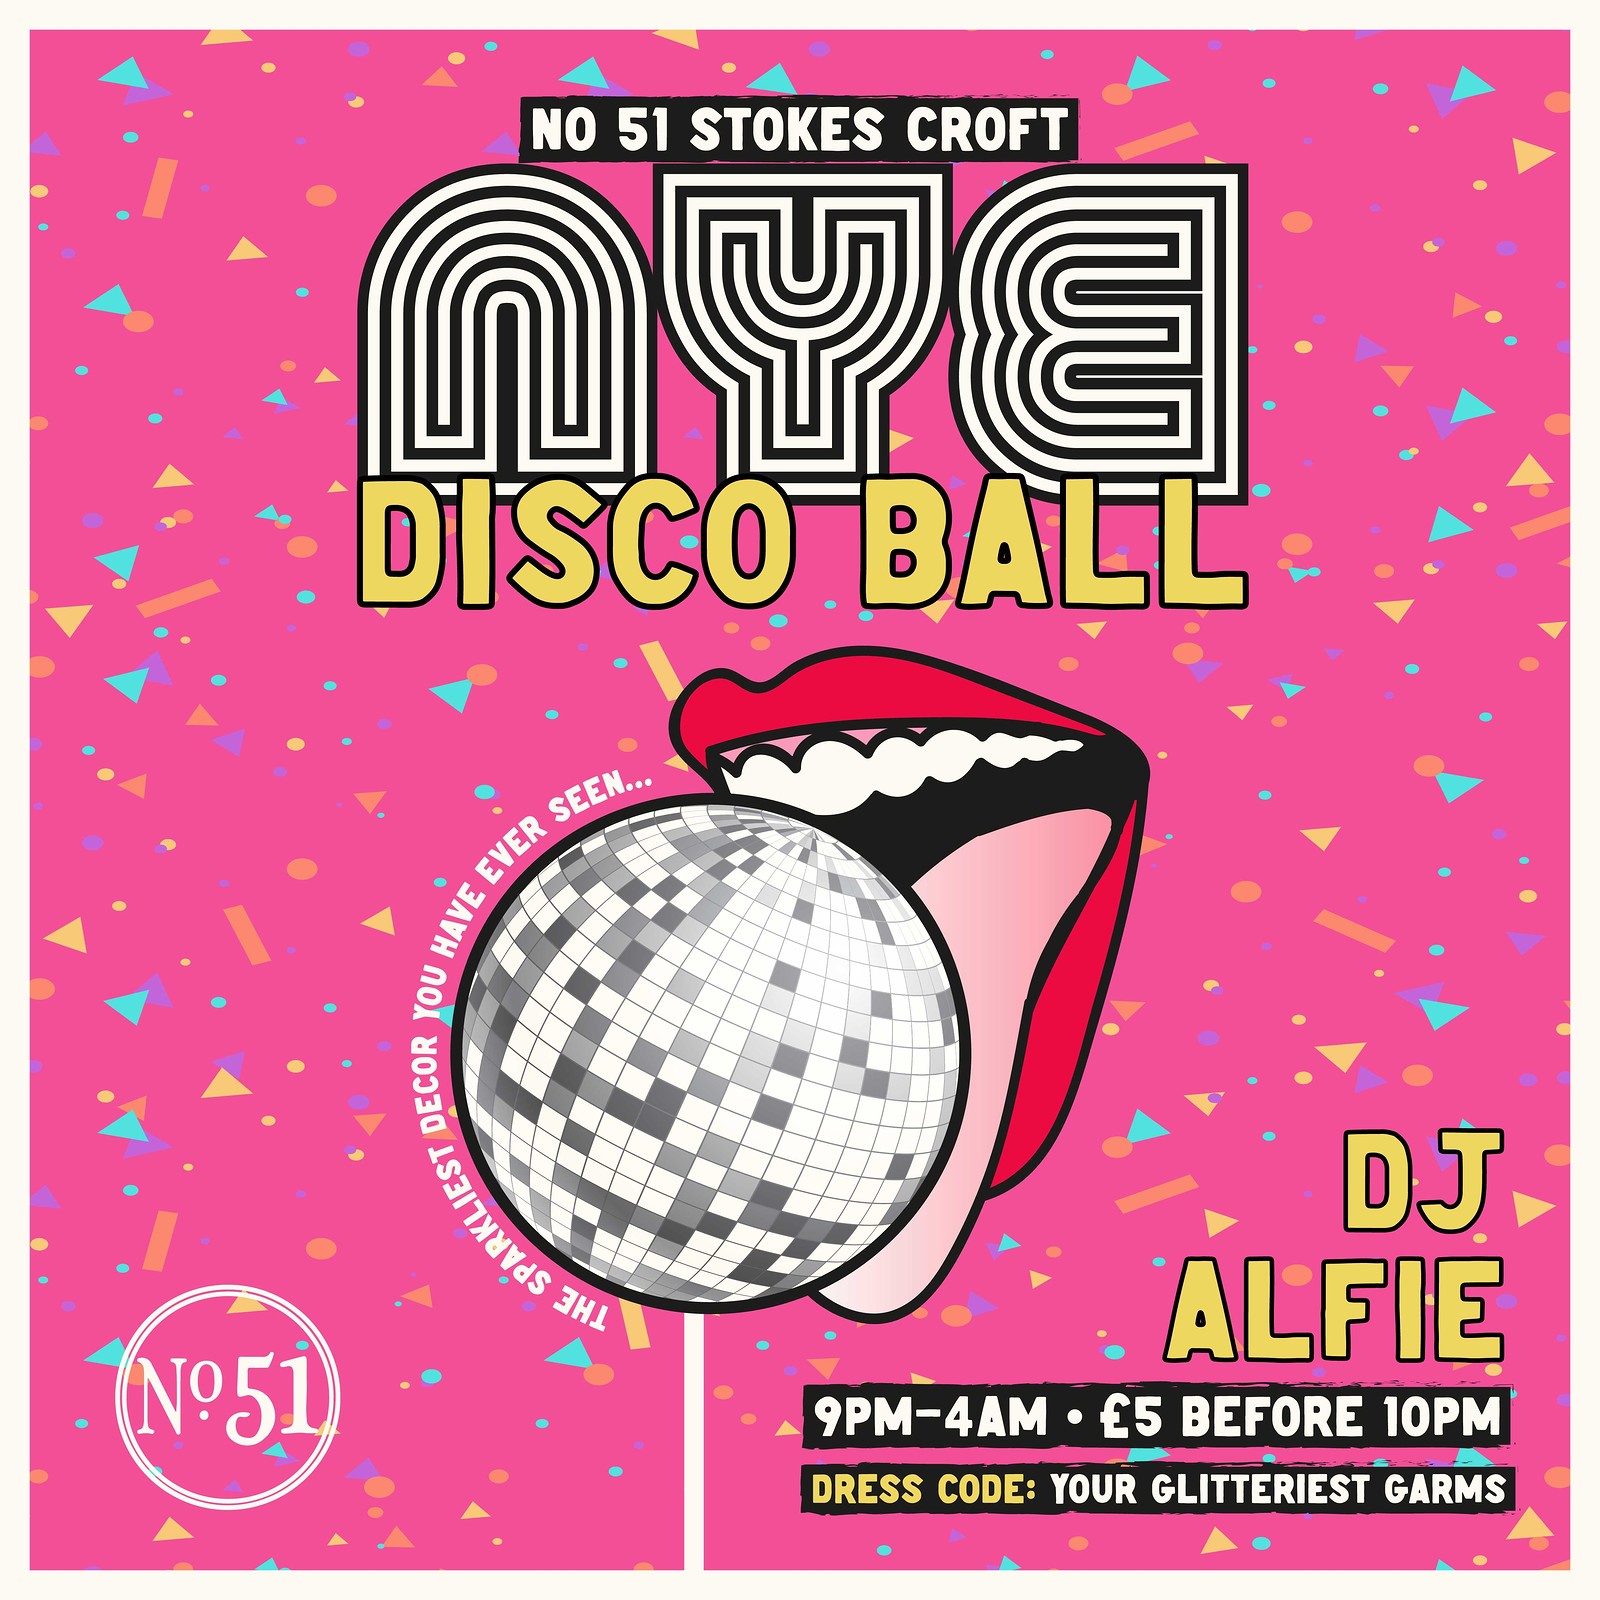 The NYE Disco Ball at 51 Stokes Croft